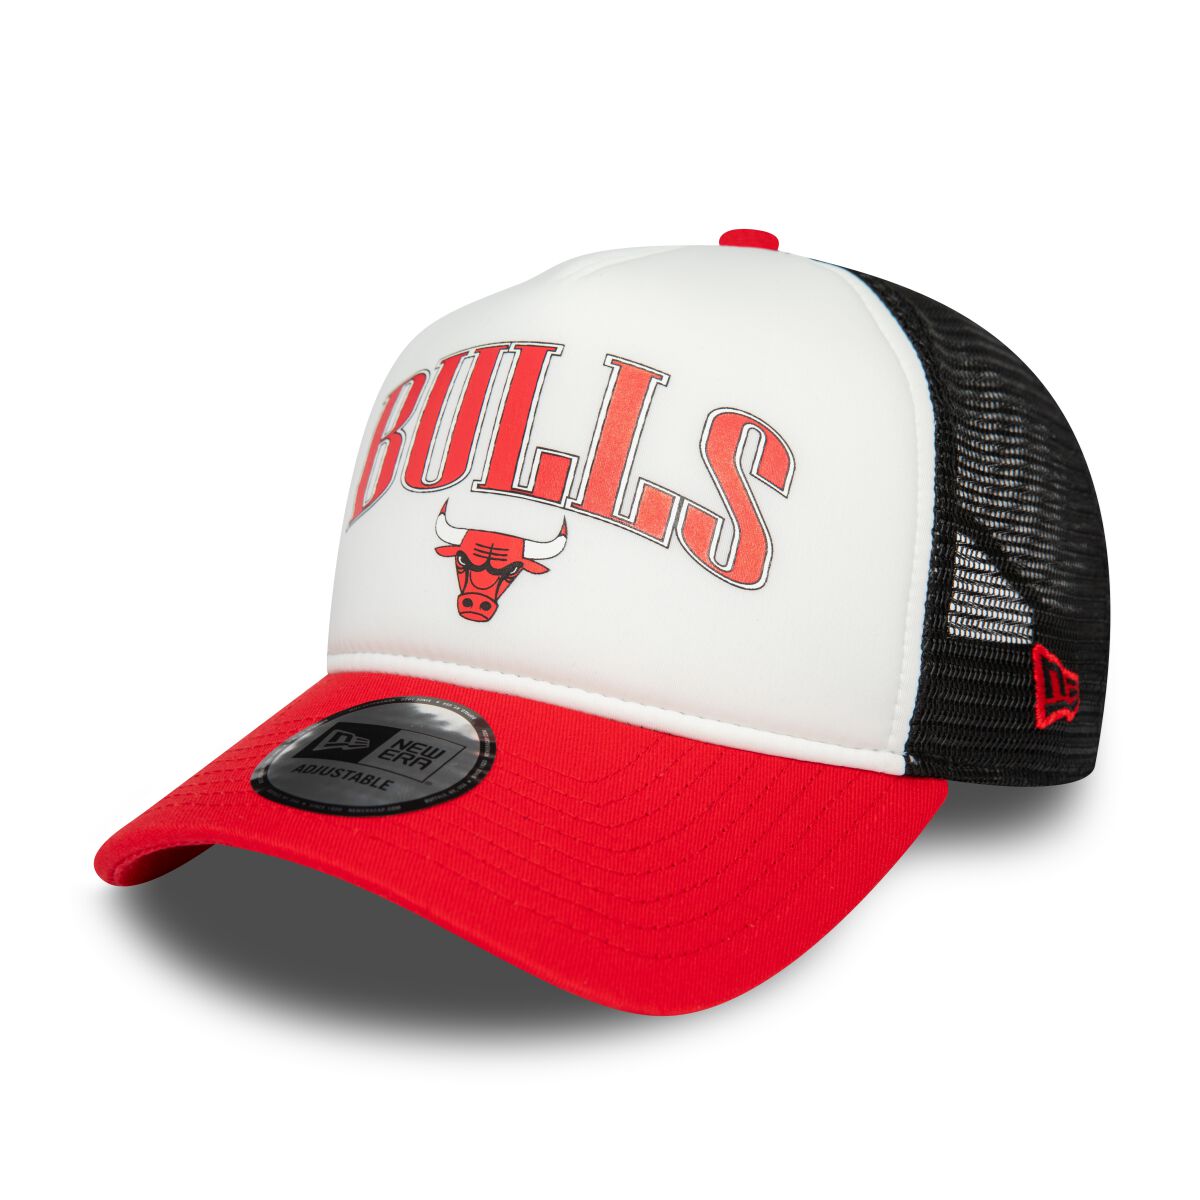 New Era - NBA - Retro Trucker 9FORTY - Chicago Bulls - Cap - multicolor